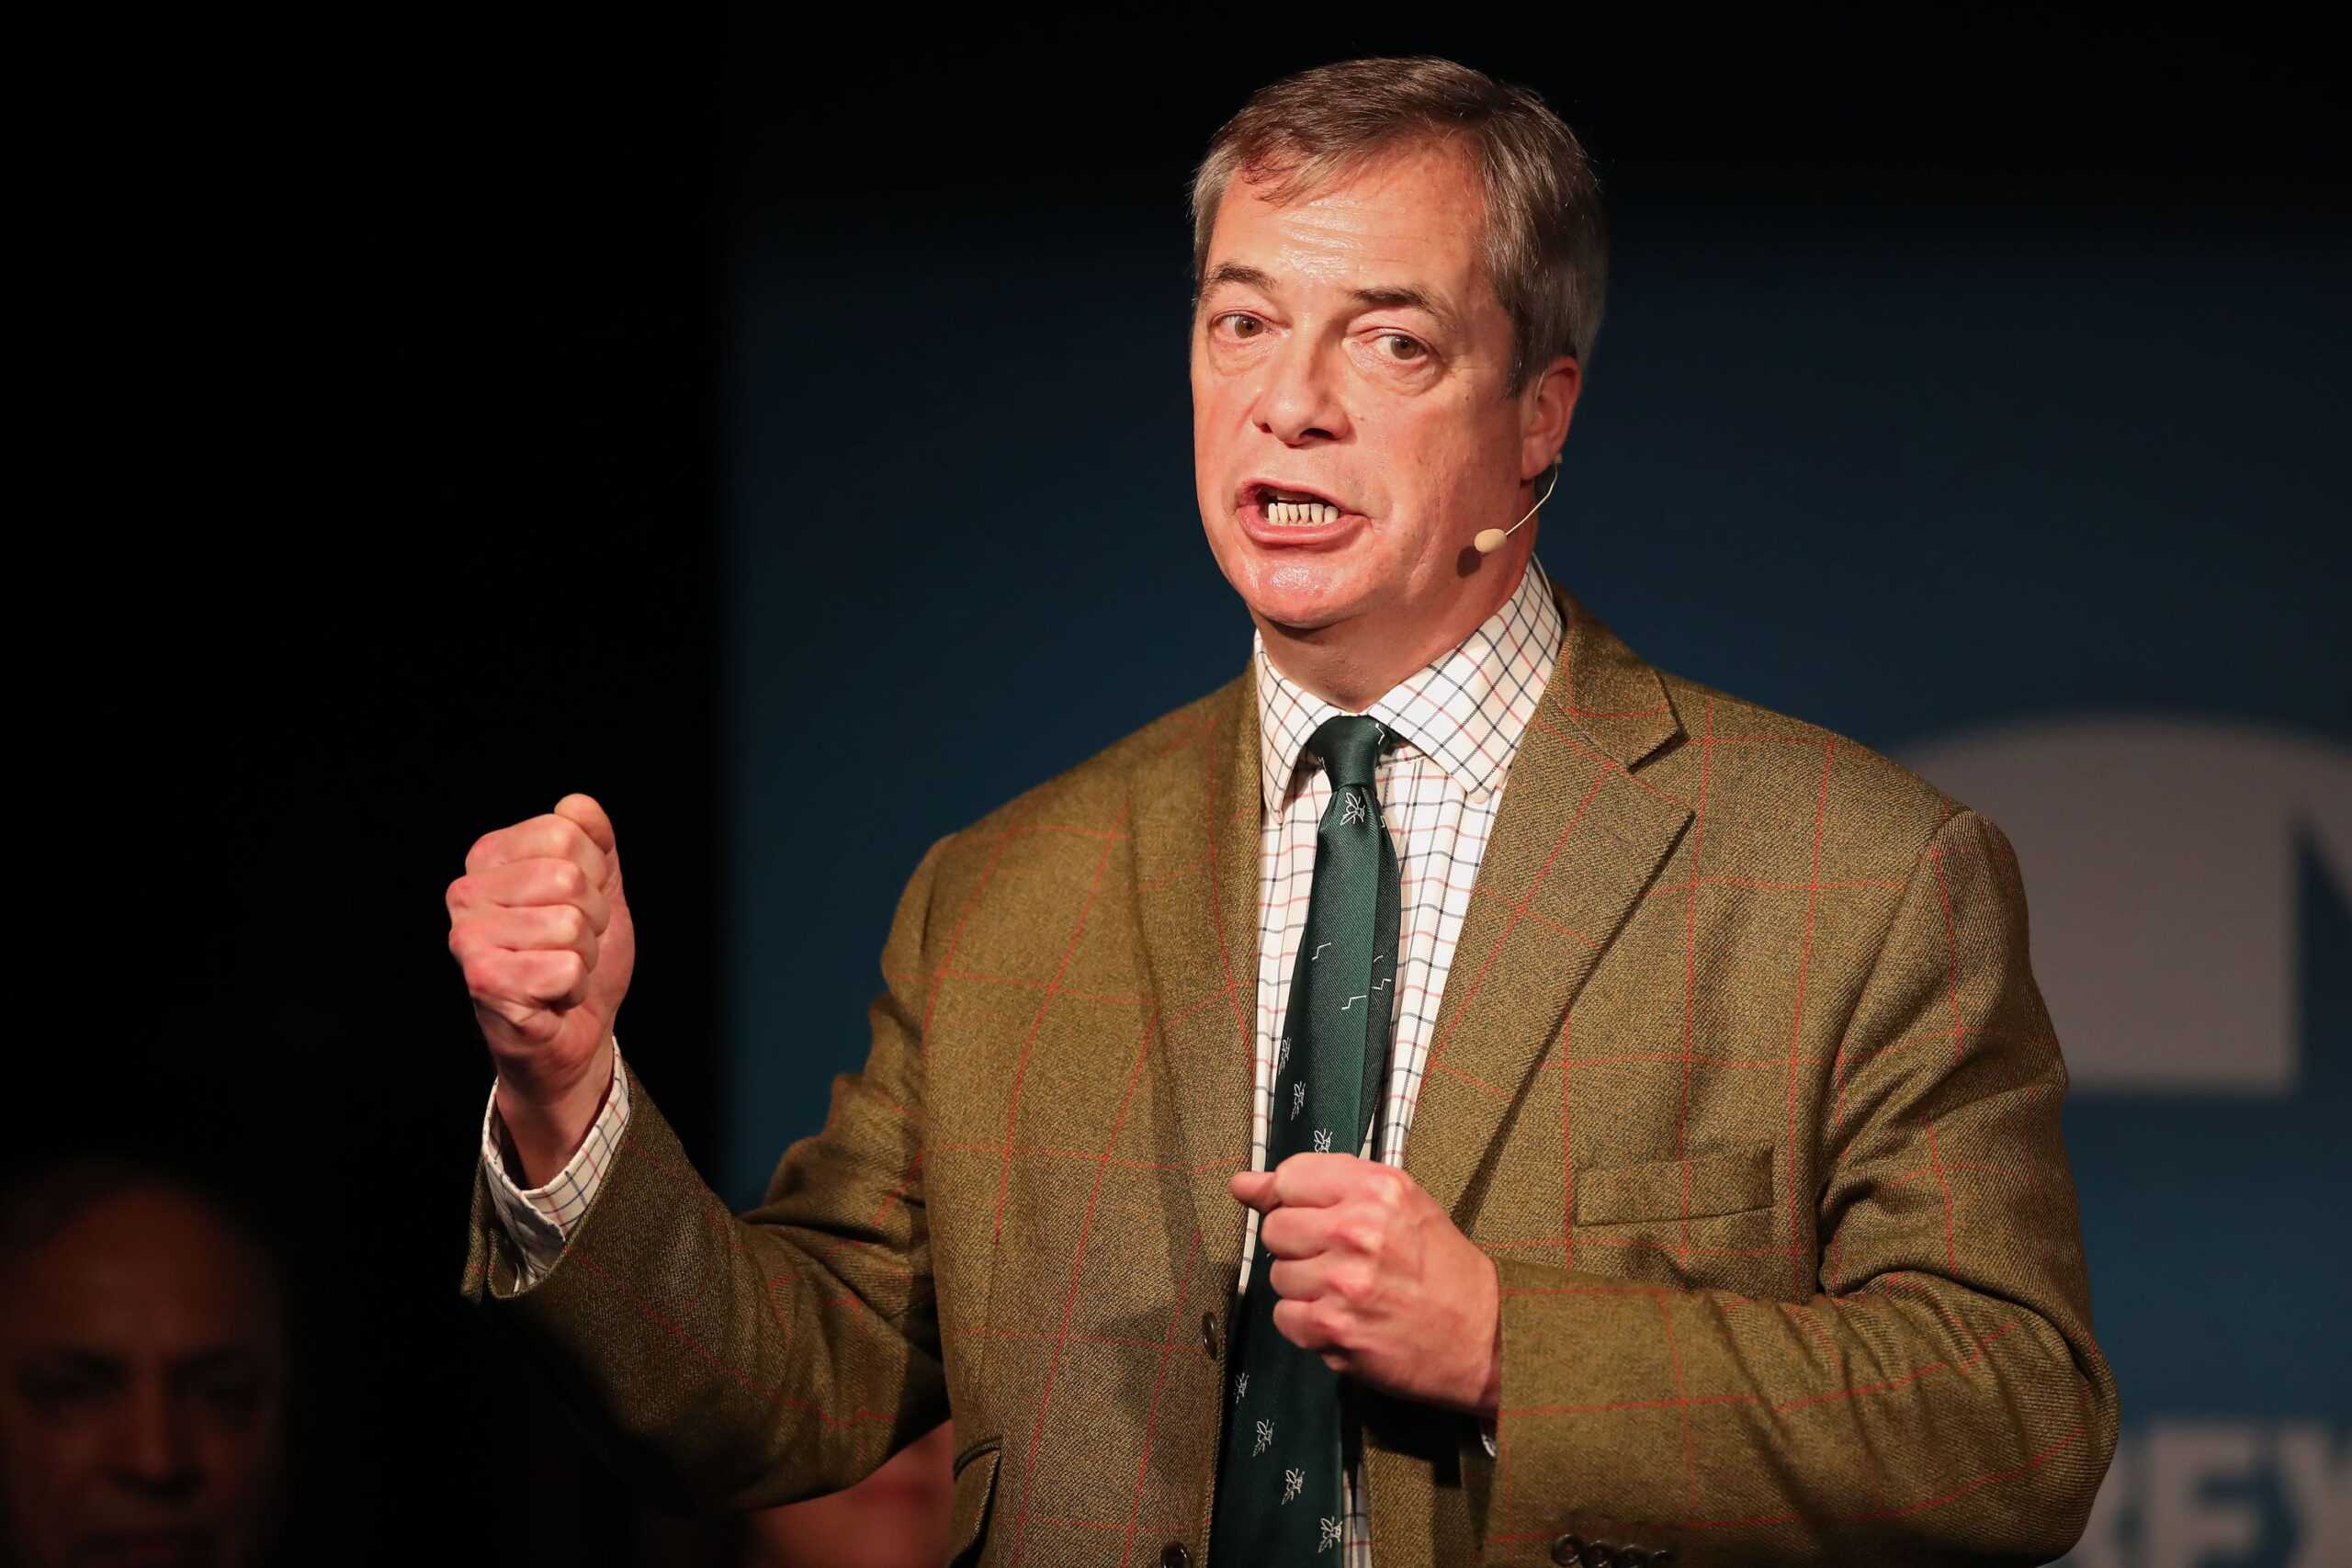 Sympathy in short supply as Farage has a wobble over debanking